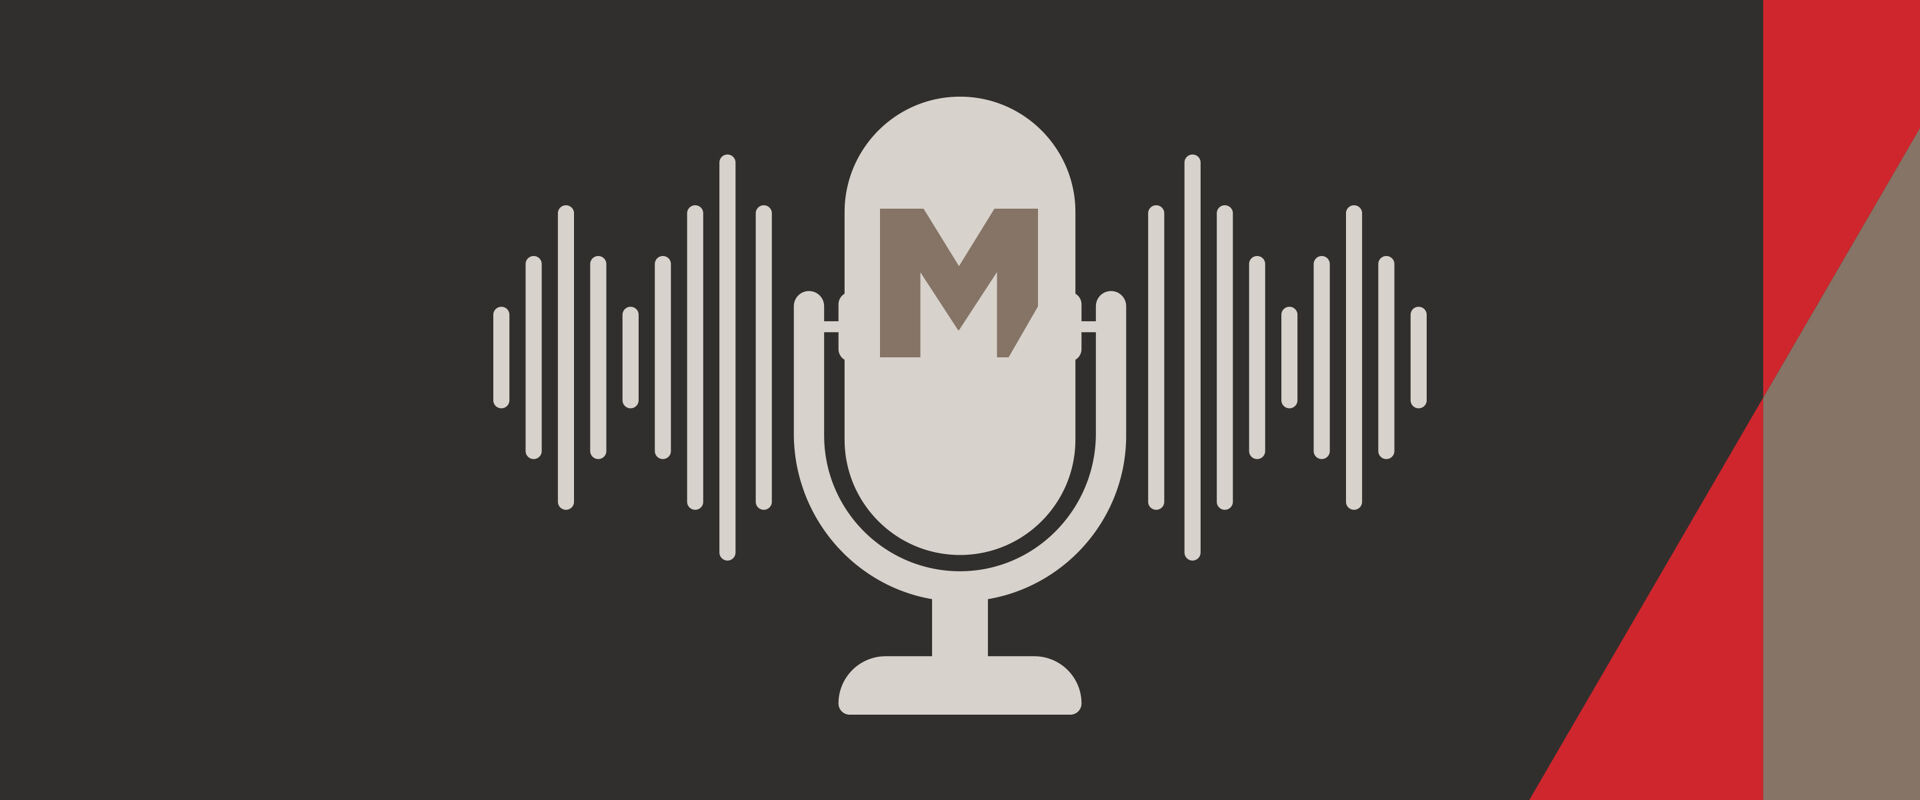 Muntstad-Podcast-Business-Center-6-1